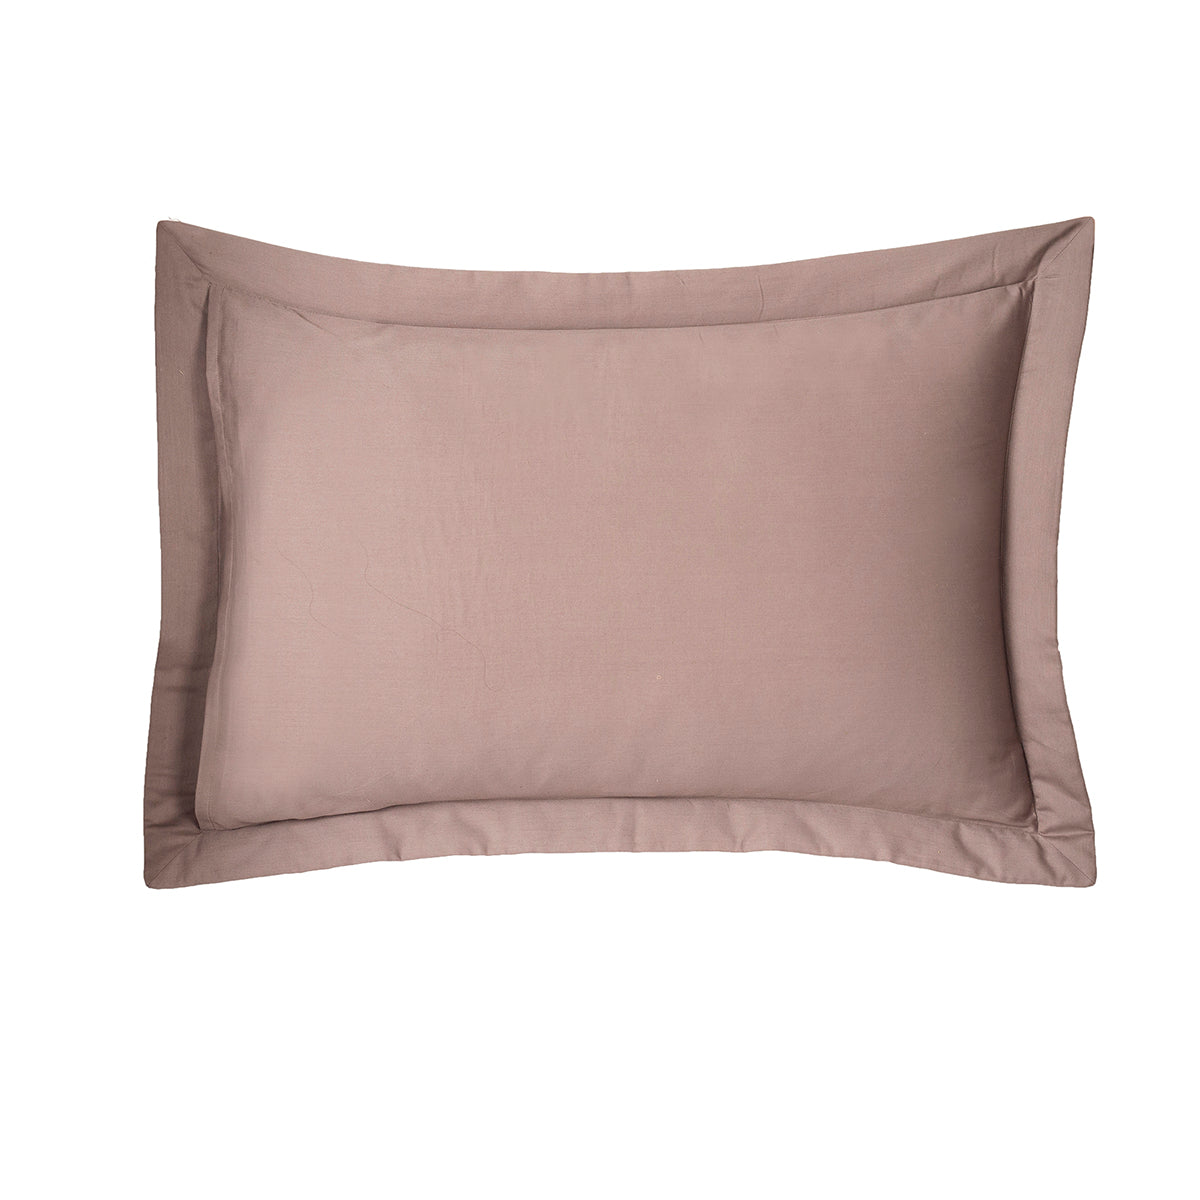 Nouveau Tradition Kaleen Global Neutral Pillow Sham Set